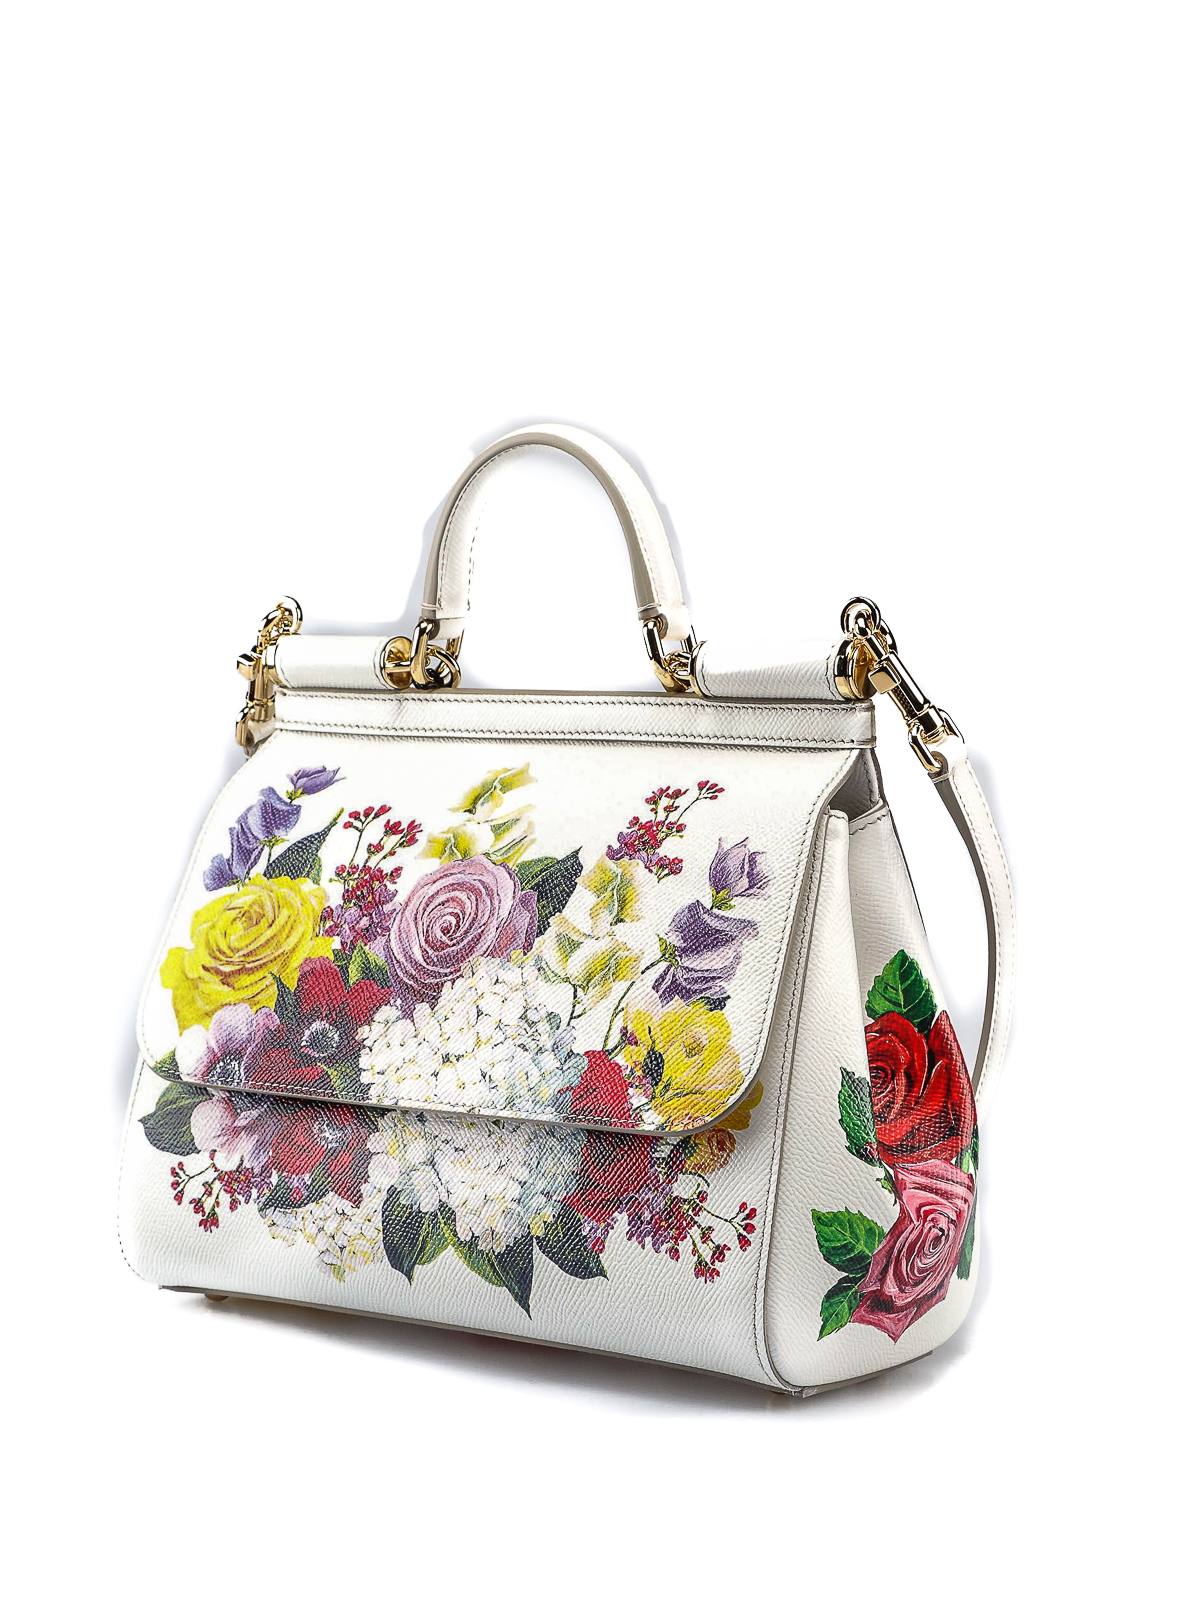 Dolce & Gabbana Dauphine Floral Miss Sicily Bag